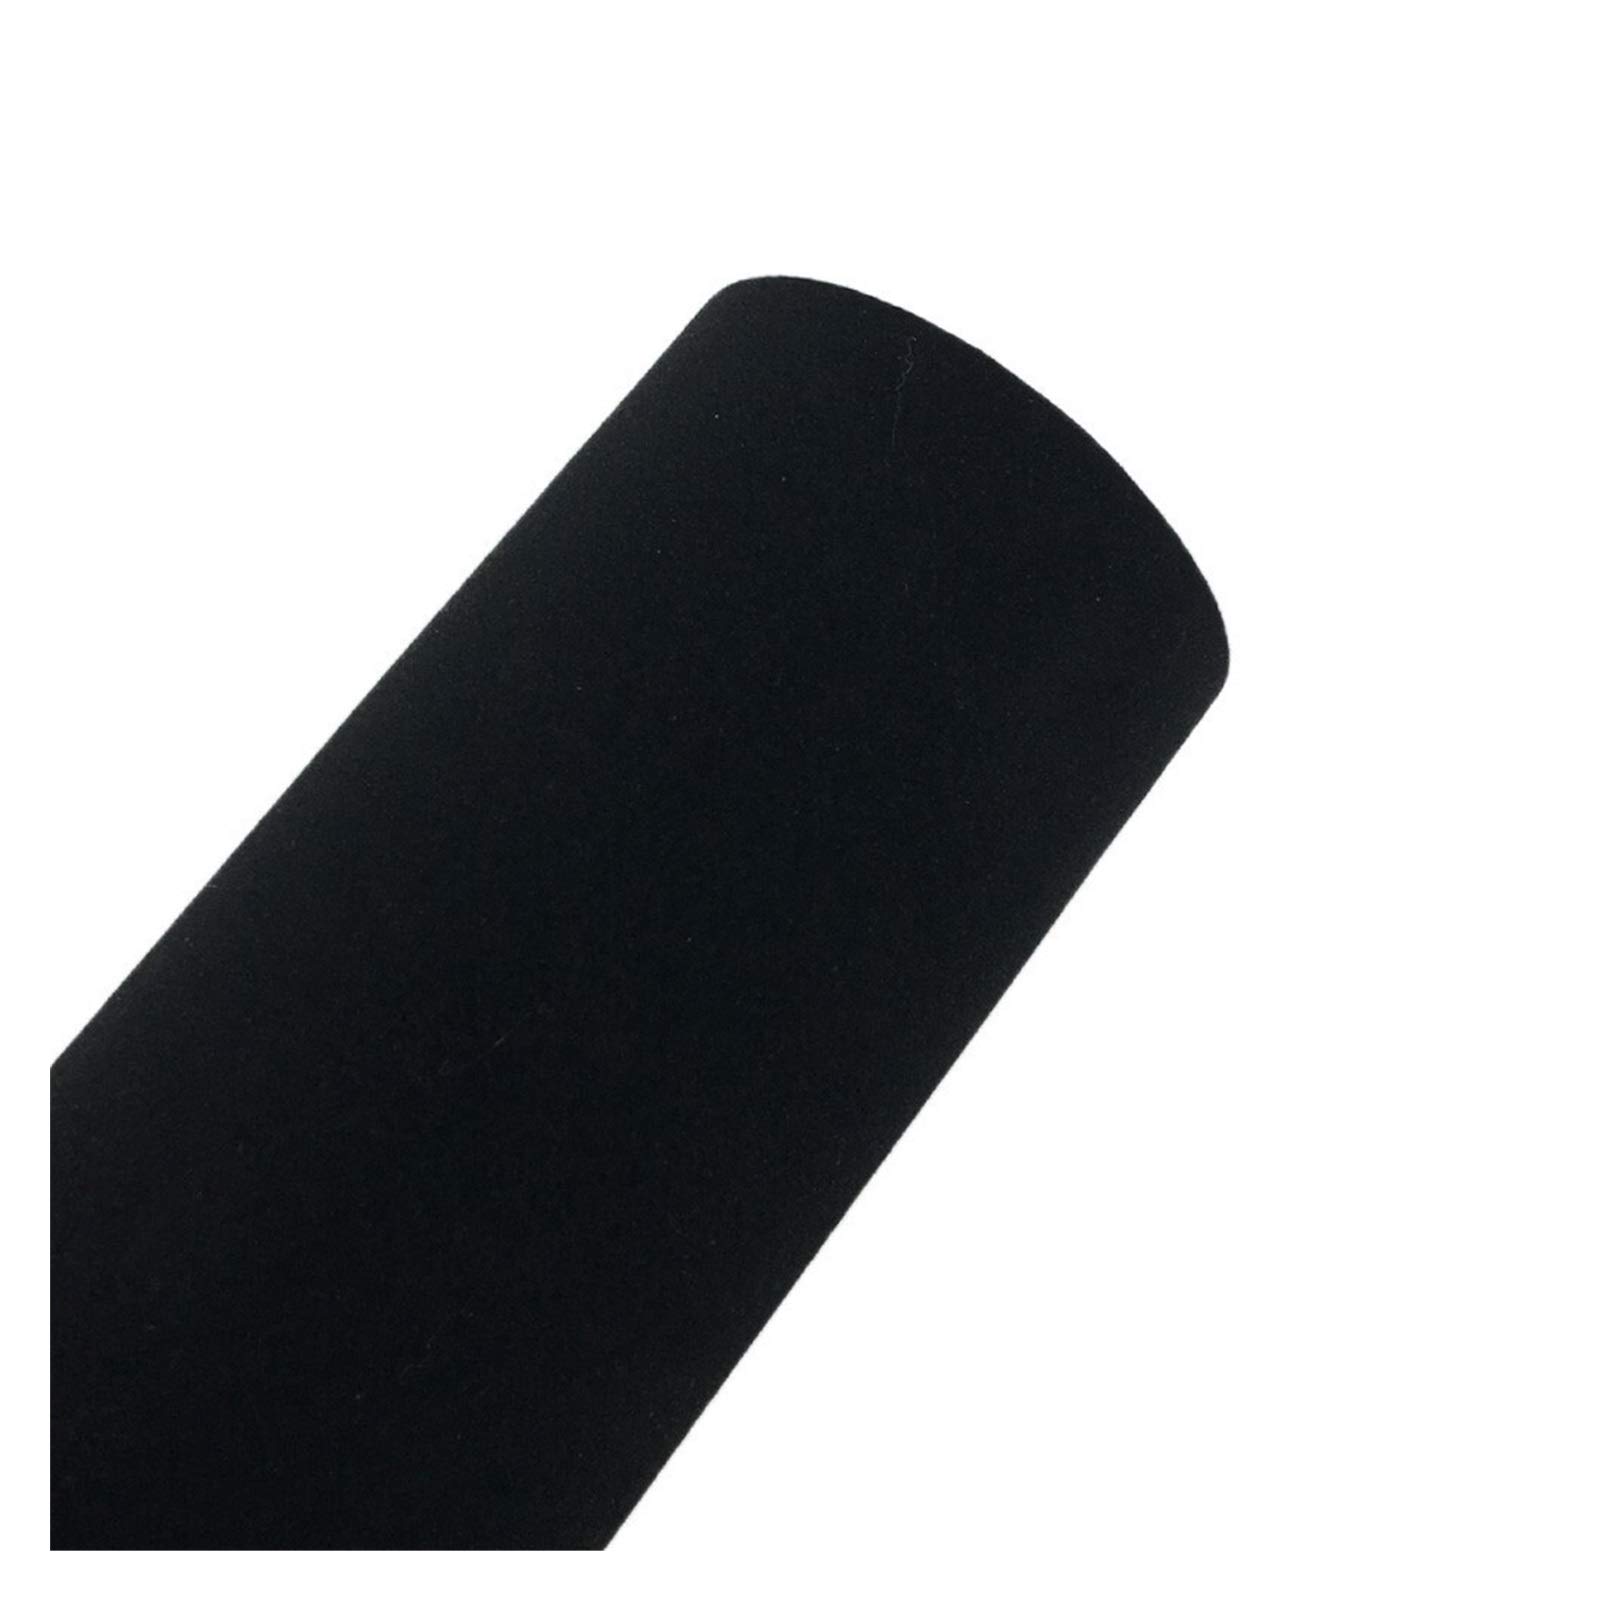 Auto Folie,Carbon Folie 30 * 152cm Suede Fabric Material Auto Verpackung Aufkleber Selbstklebefolie, verwendet for Auto Innen- / Außen Car Styling (Color Name : Black, Size : 50cmx150cm) von BINCIBH